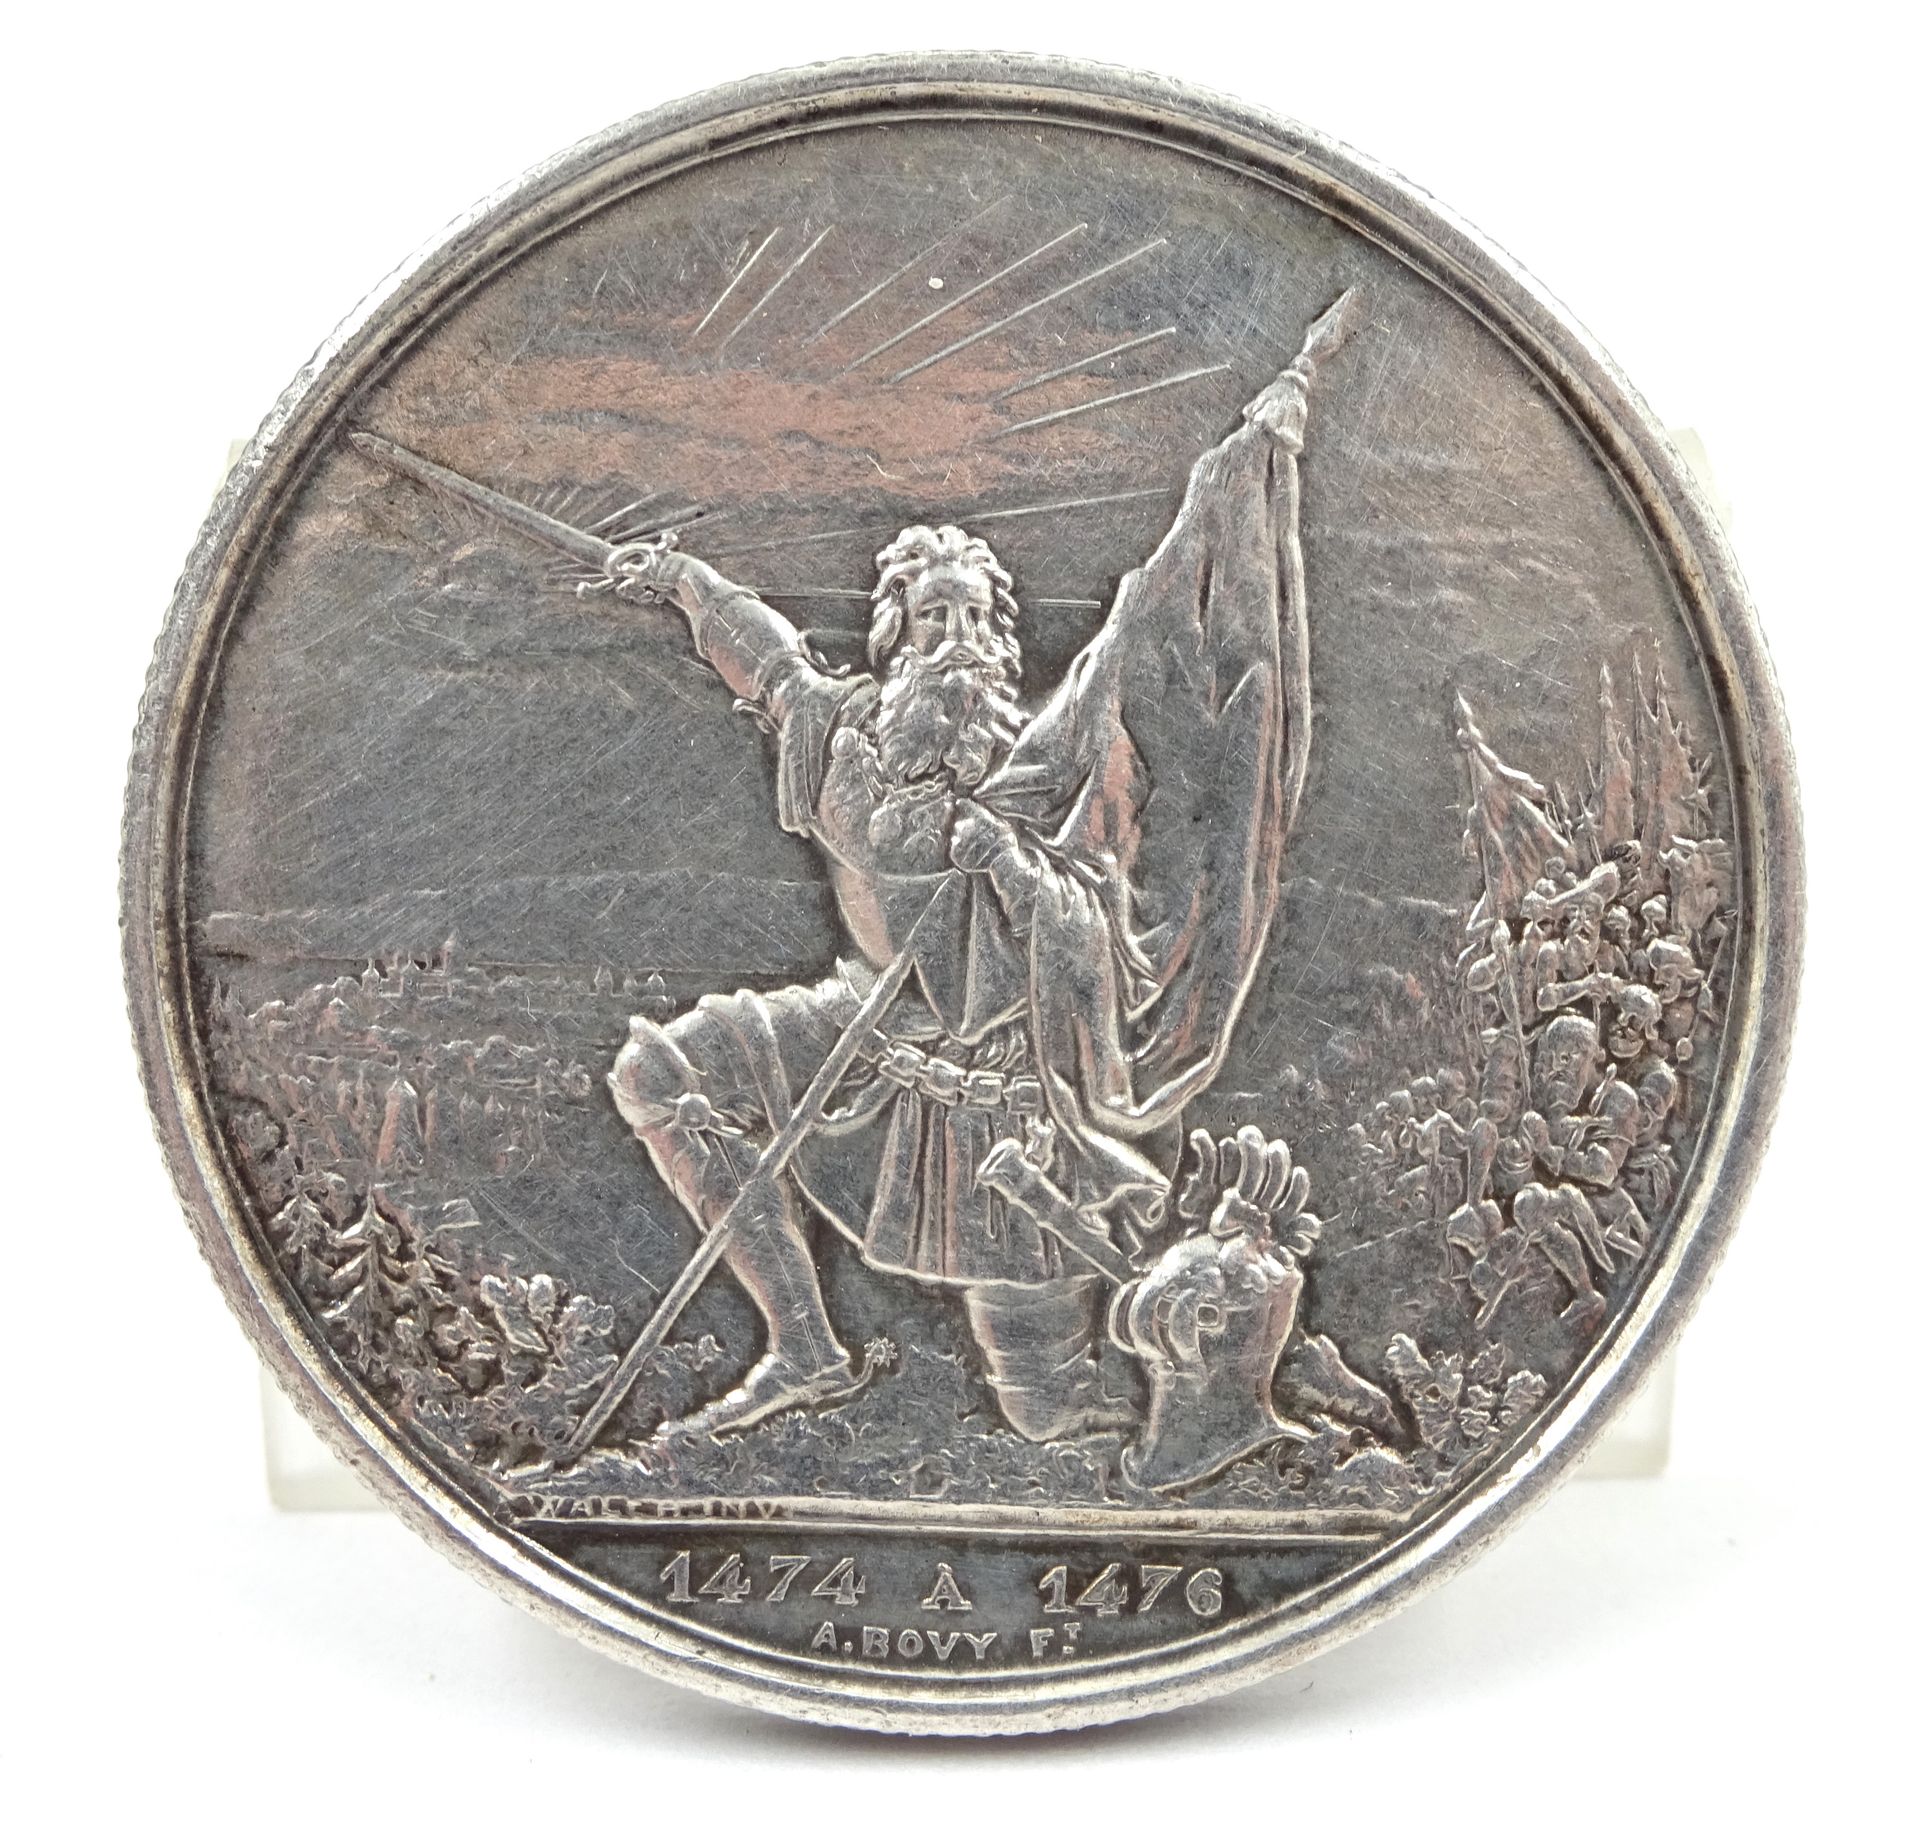 Null Moneda de plata de 5 francos suizos, San Gall, 1874. 24,98 g netos.